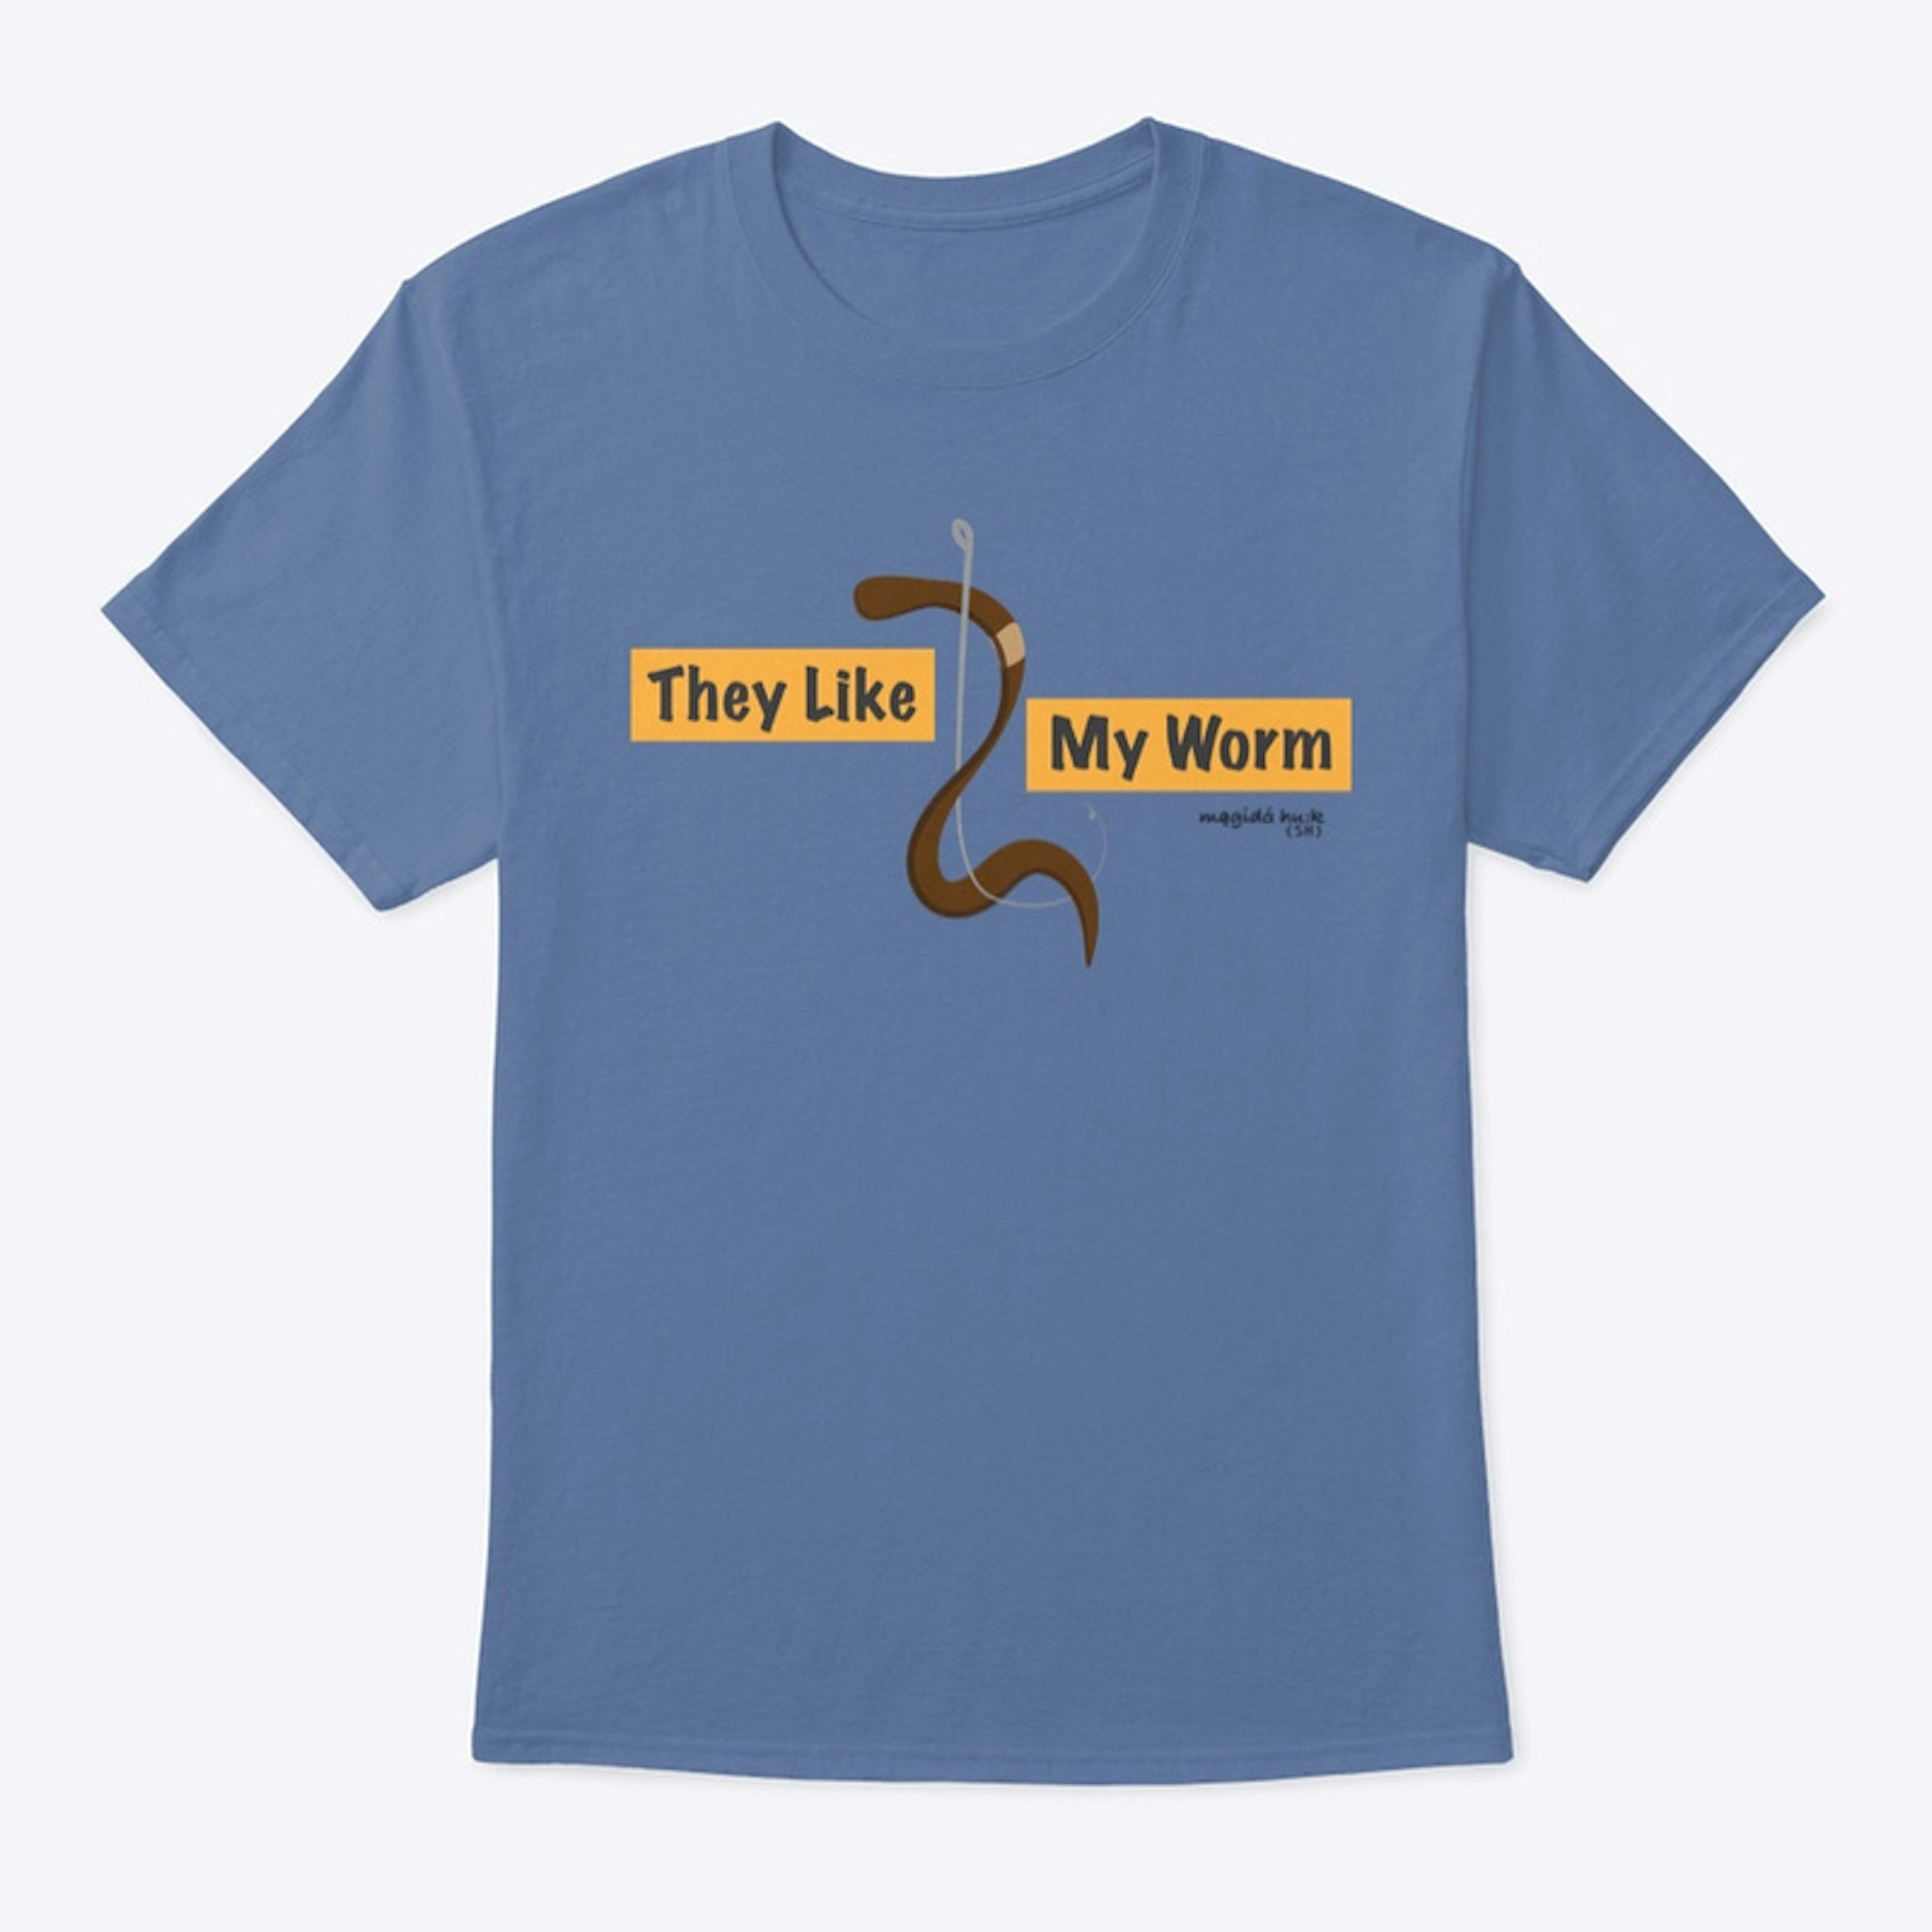 My Worm (Fishing)